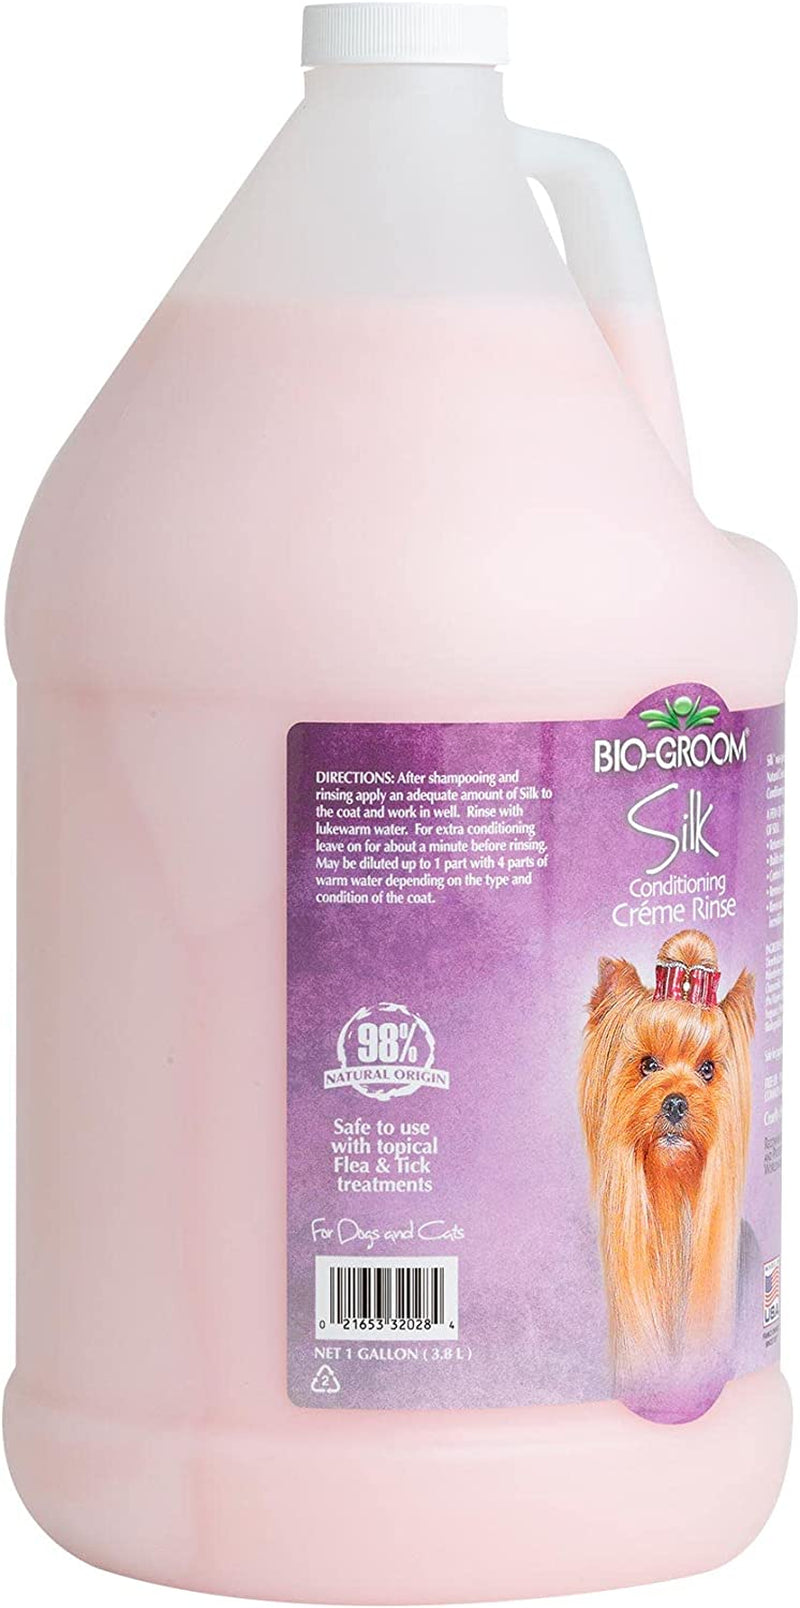 Silk Creme Rinse Dog Conditioner - Conditioner for Dogs, Puppy Conditioner, Dog Conditioner Detangler, Dog Hair Conditioner - 1 Gallon